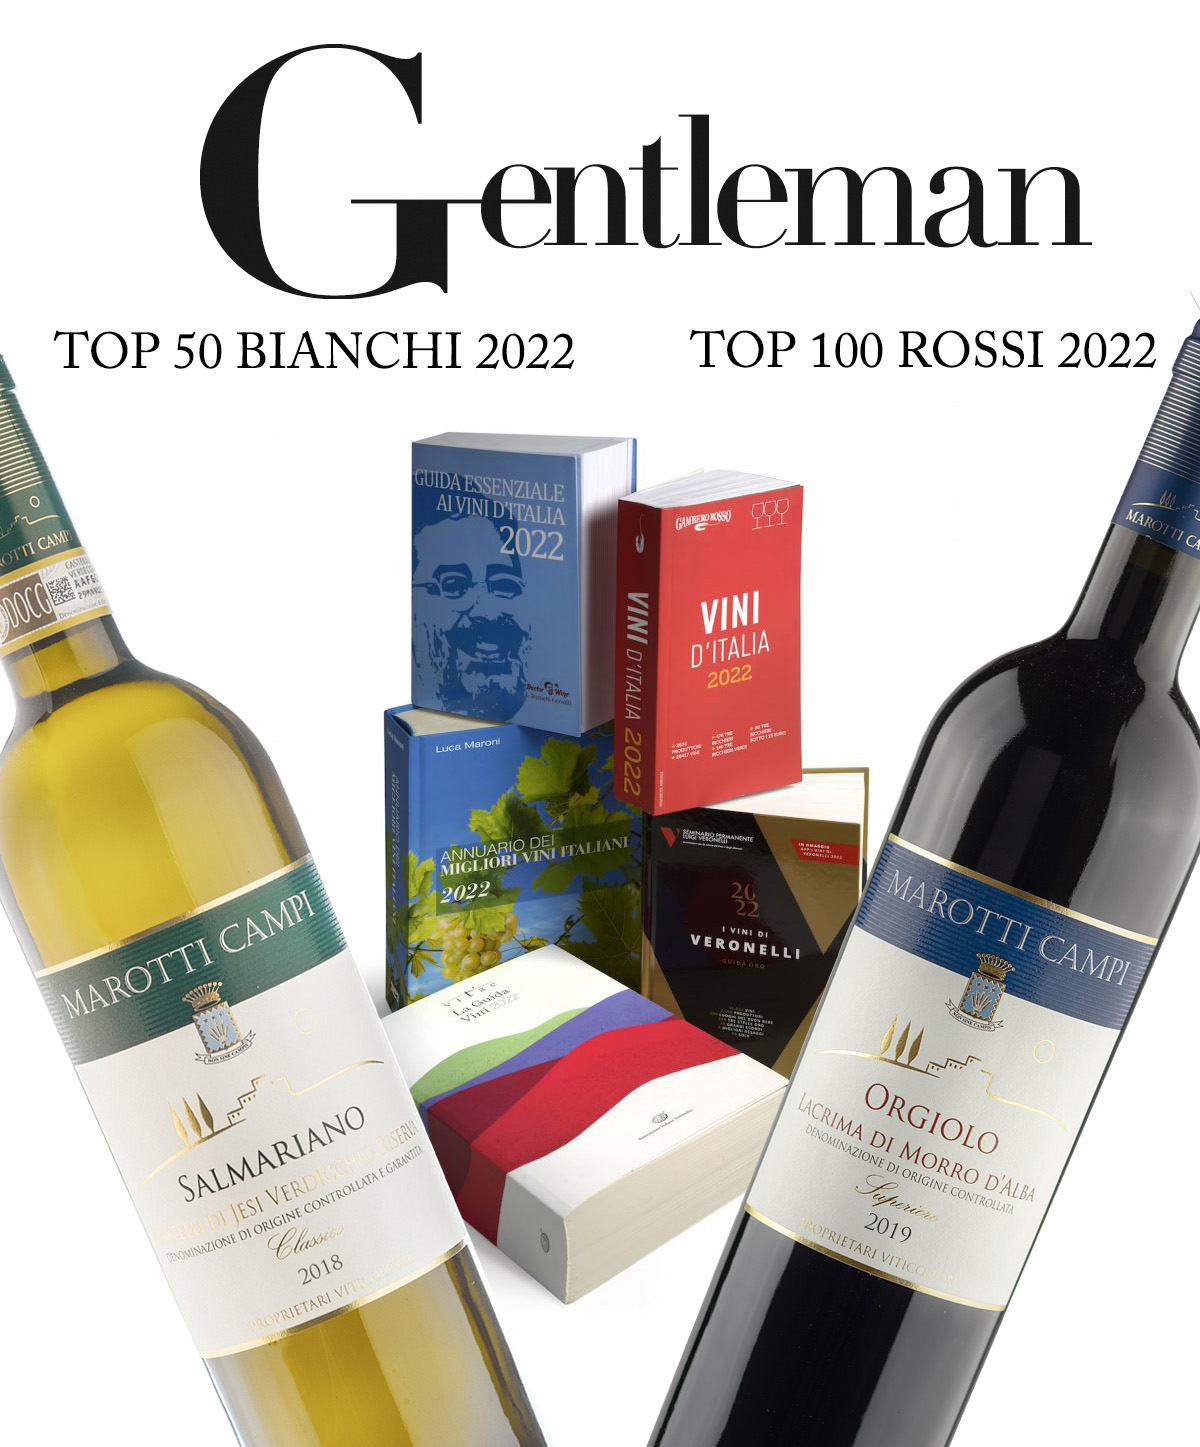 Gentleman Milano Finanza Top 100 Rossi Top 50 Campi